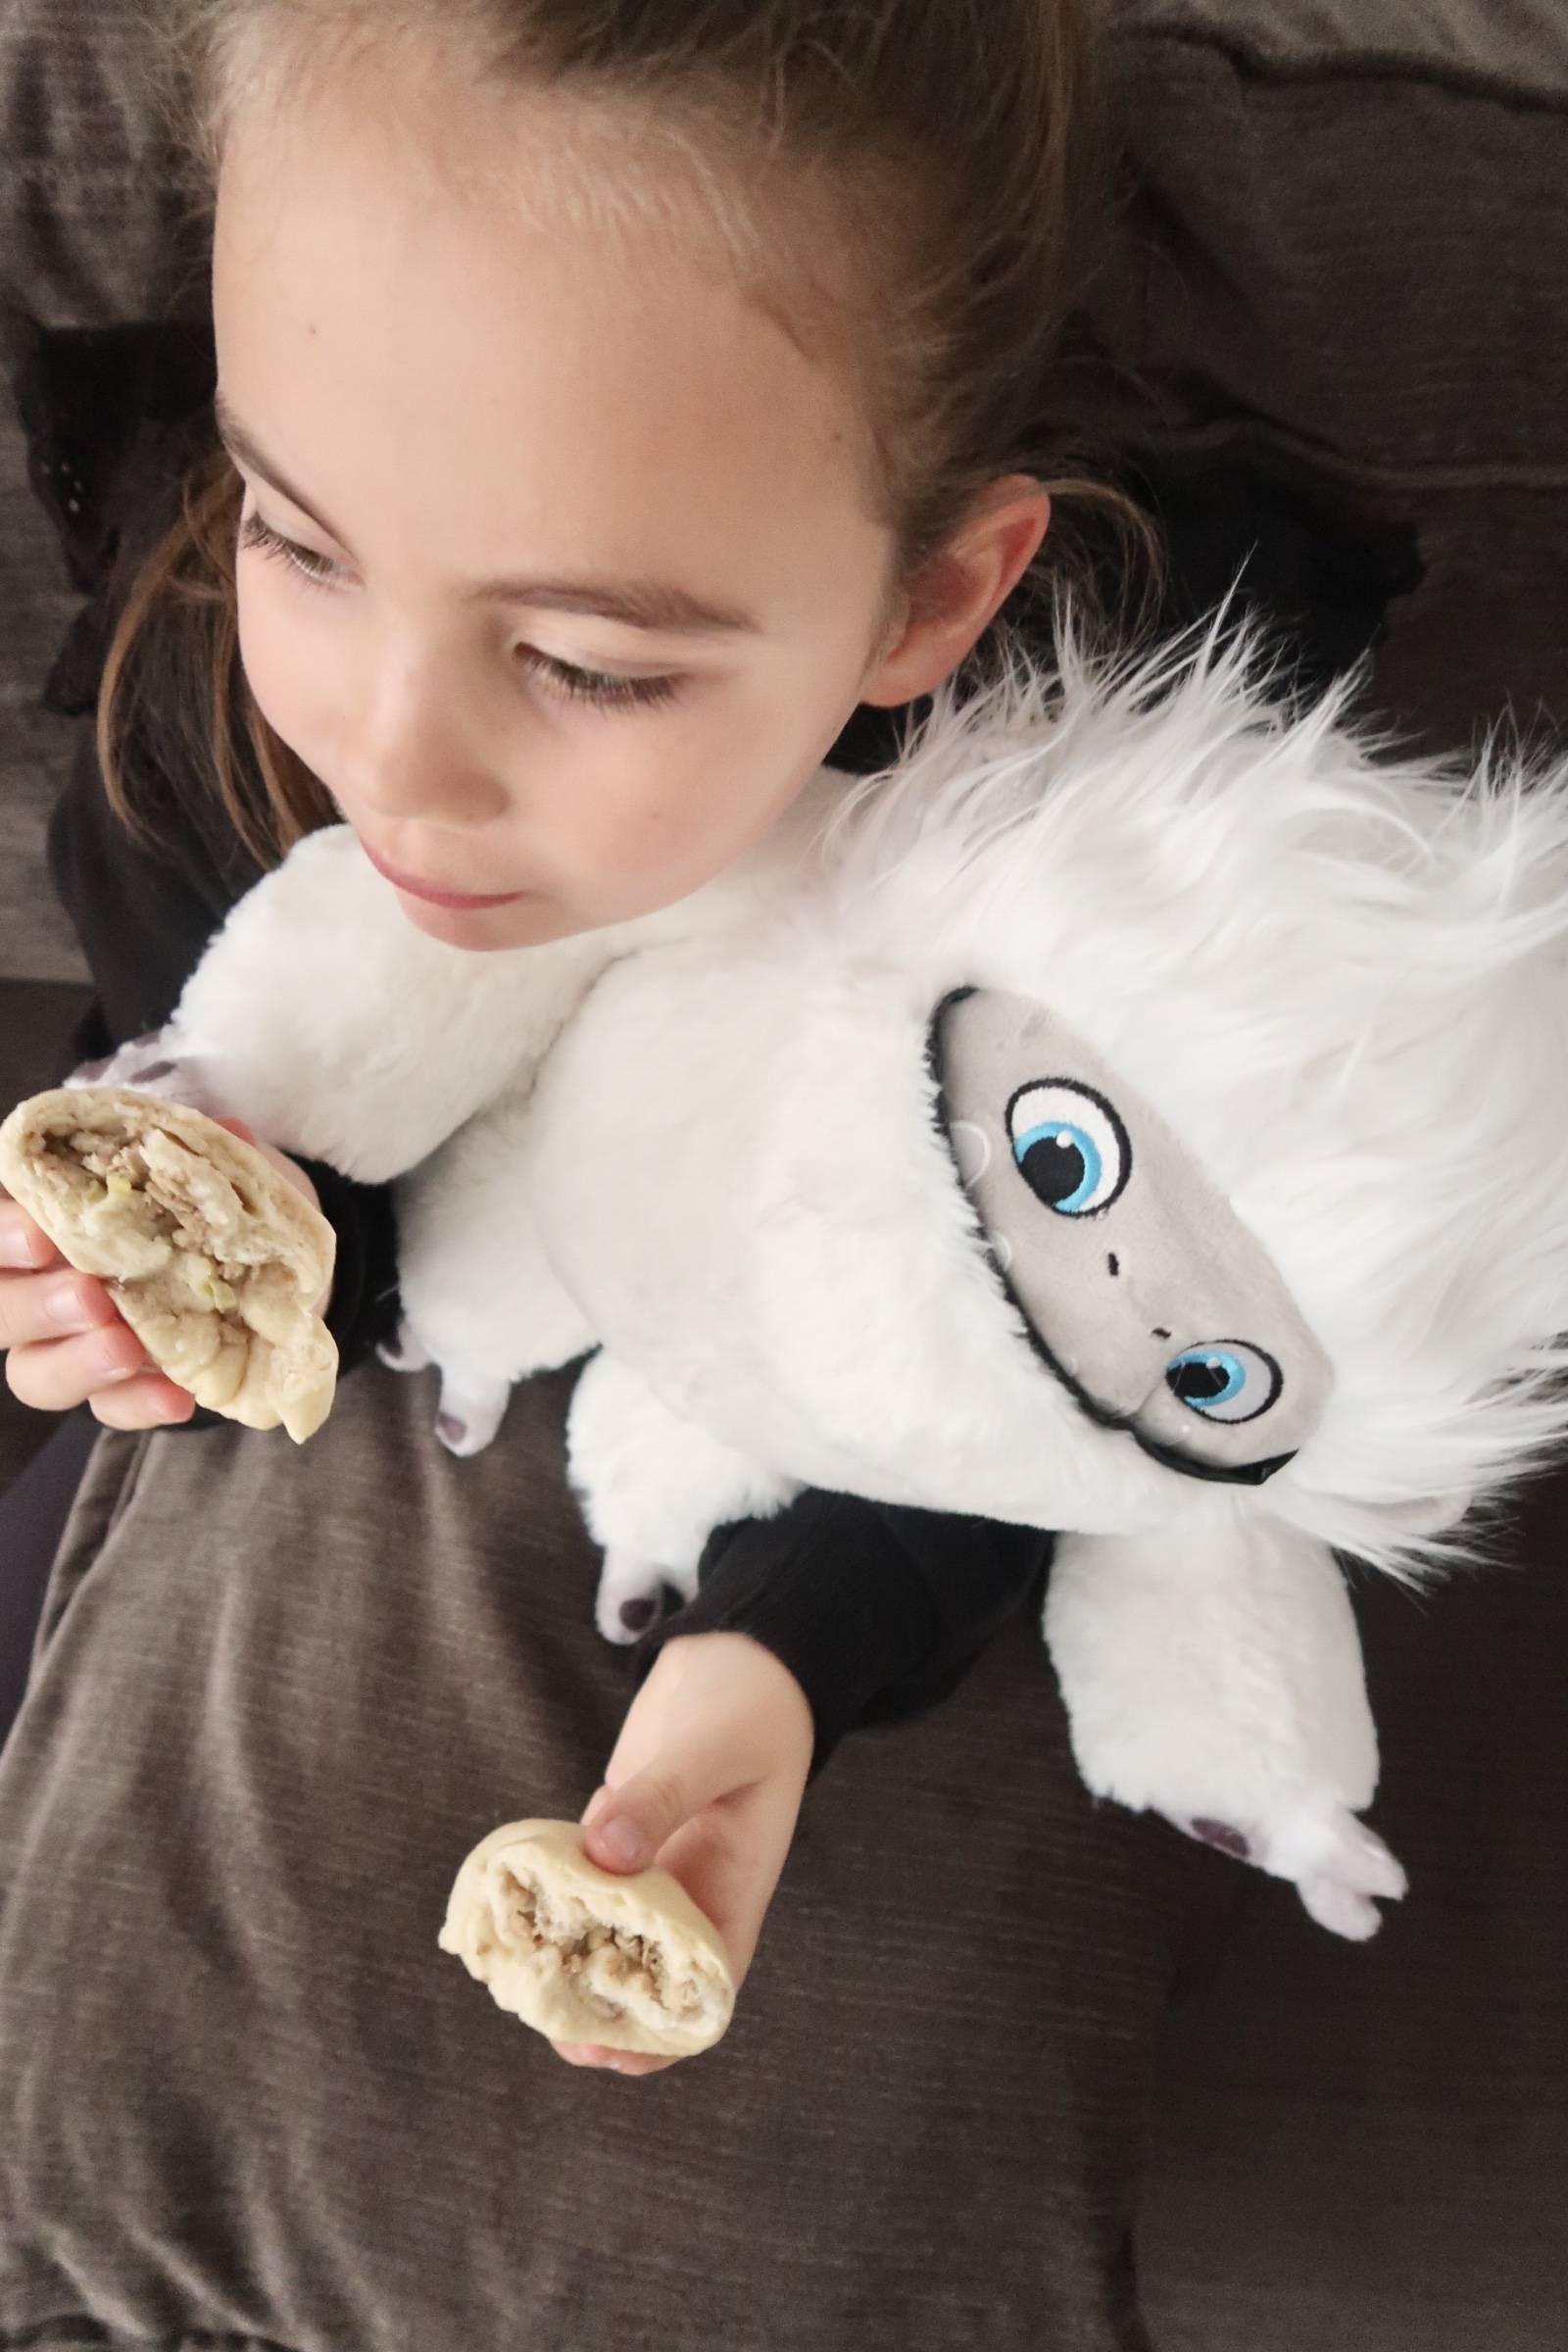 Child eating boo bun while cuddling fluffy yeti toy